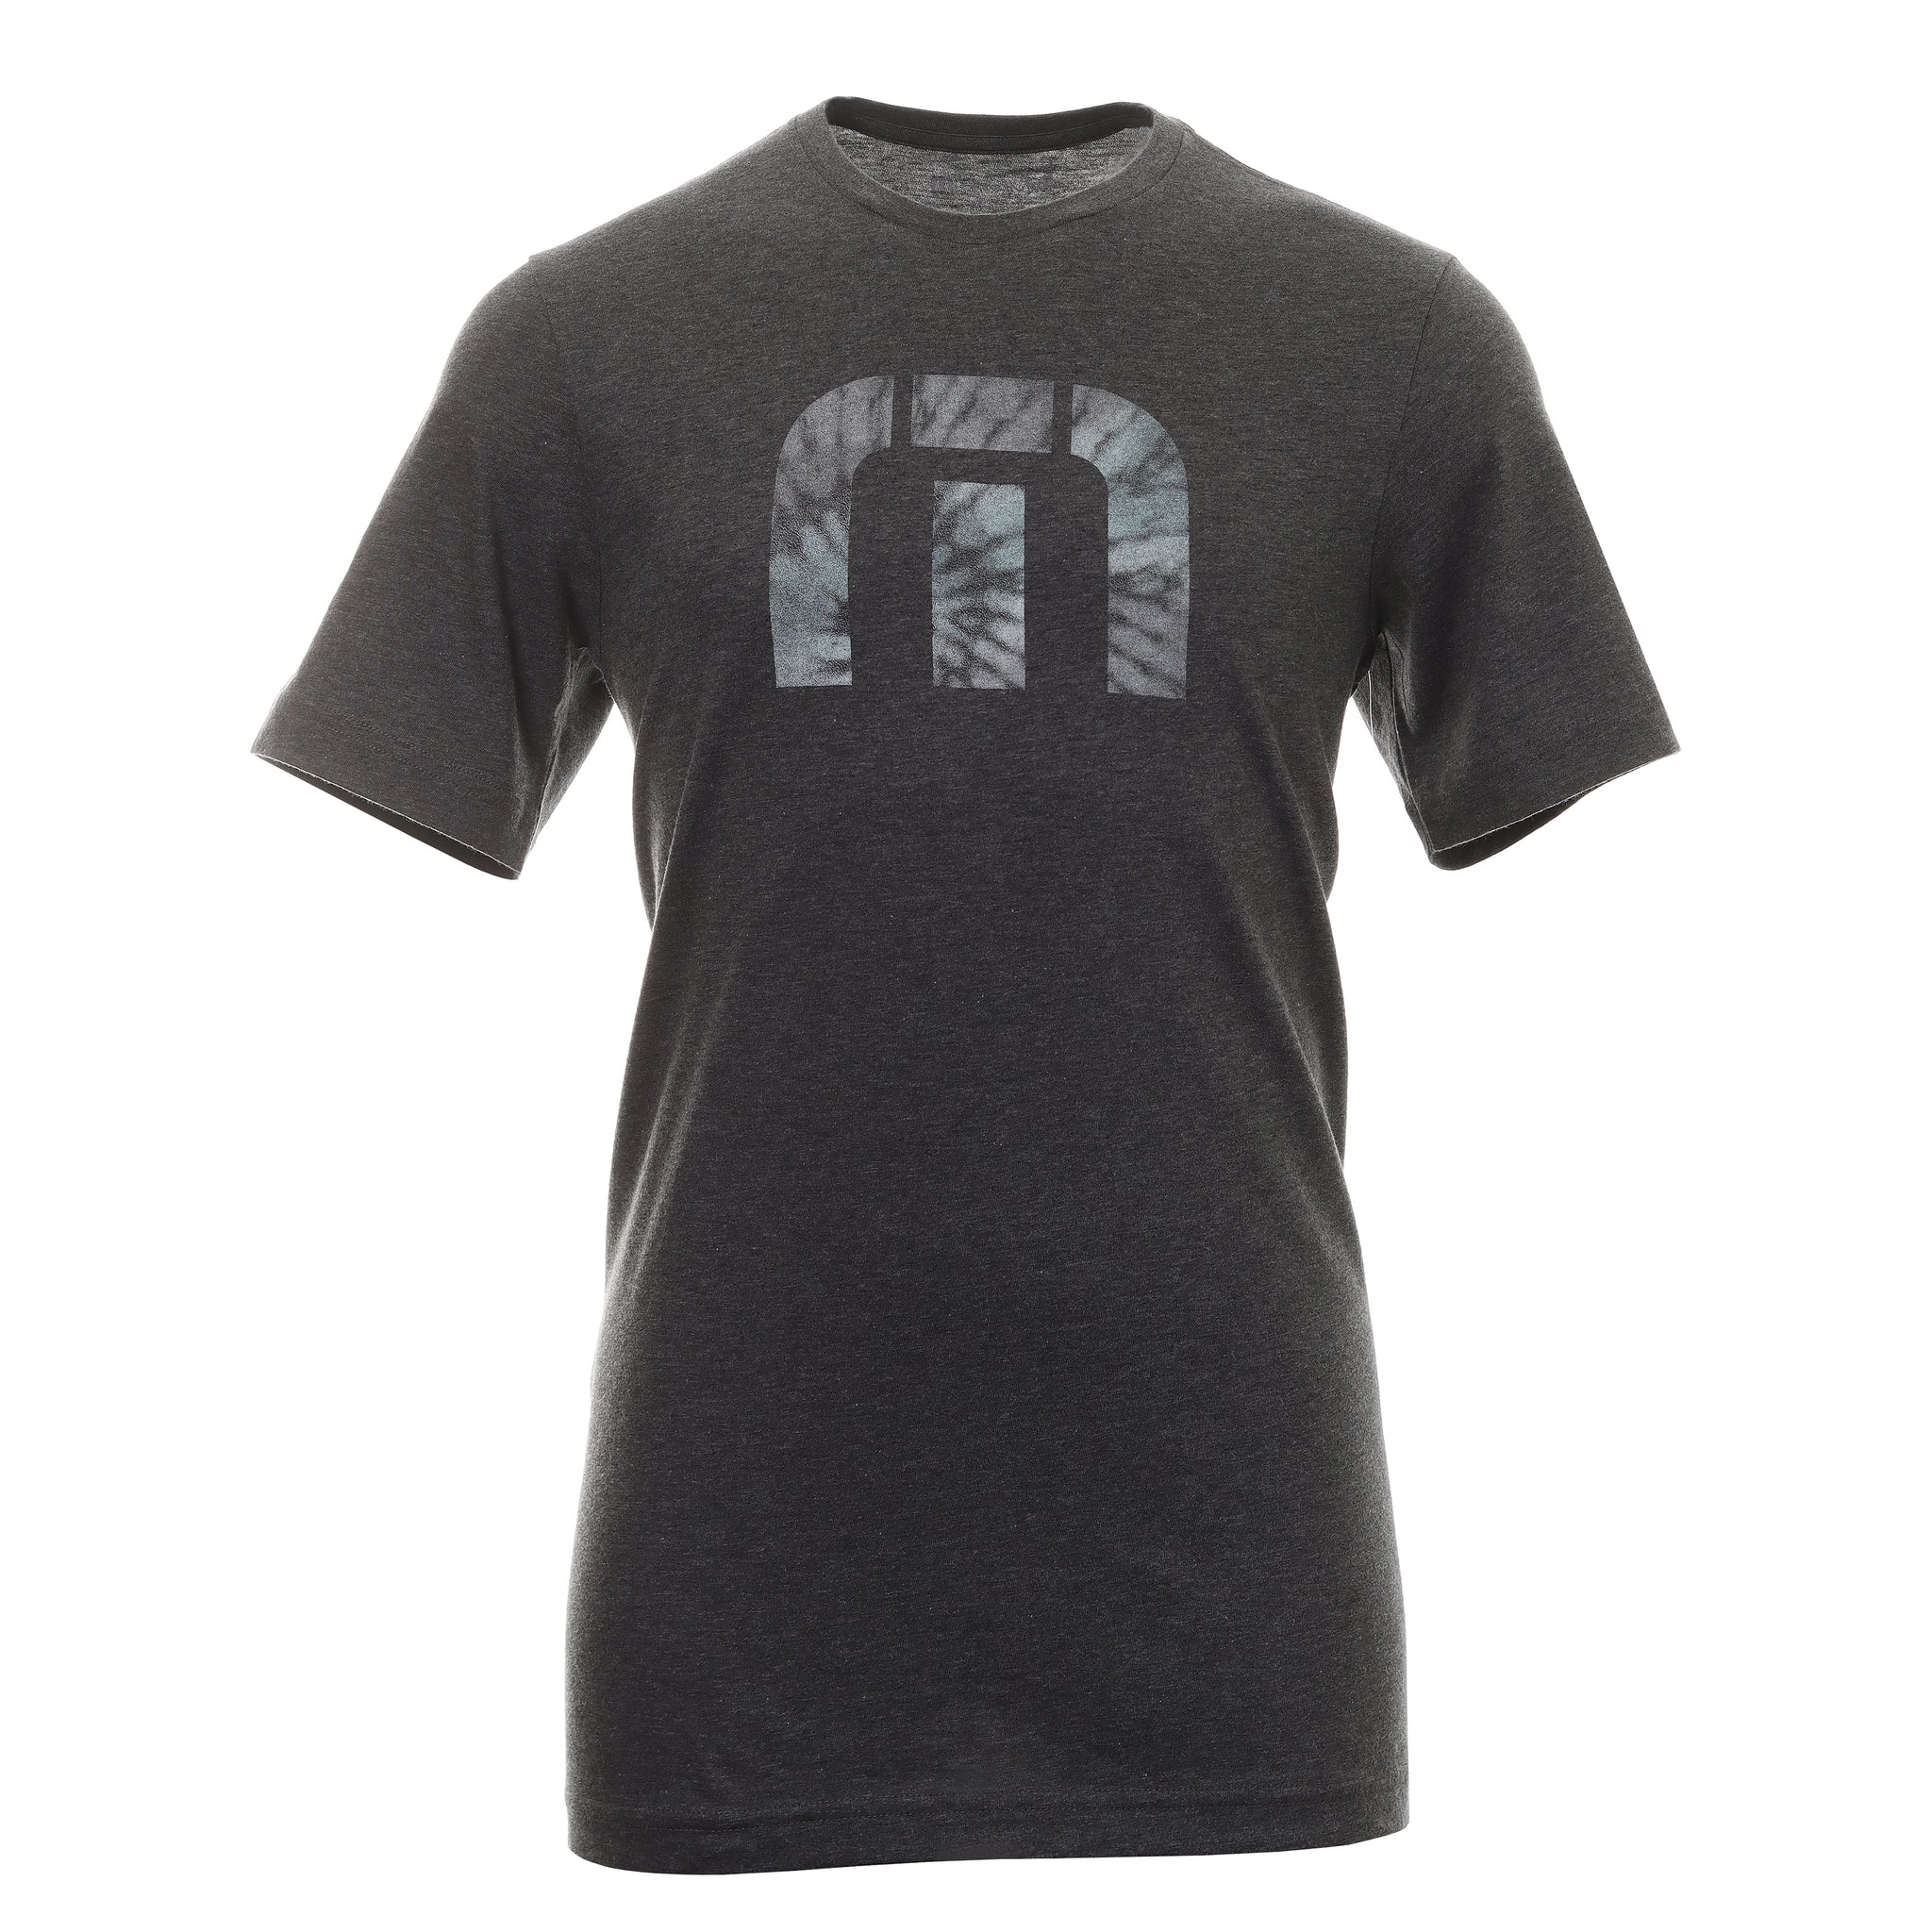 travismathew-chimney-rock-tee-shirt-1mw252-heather-grey-pinstripe